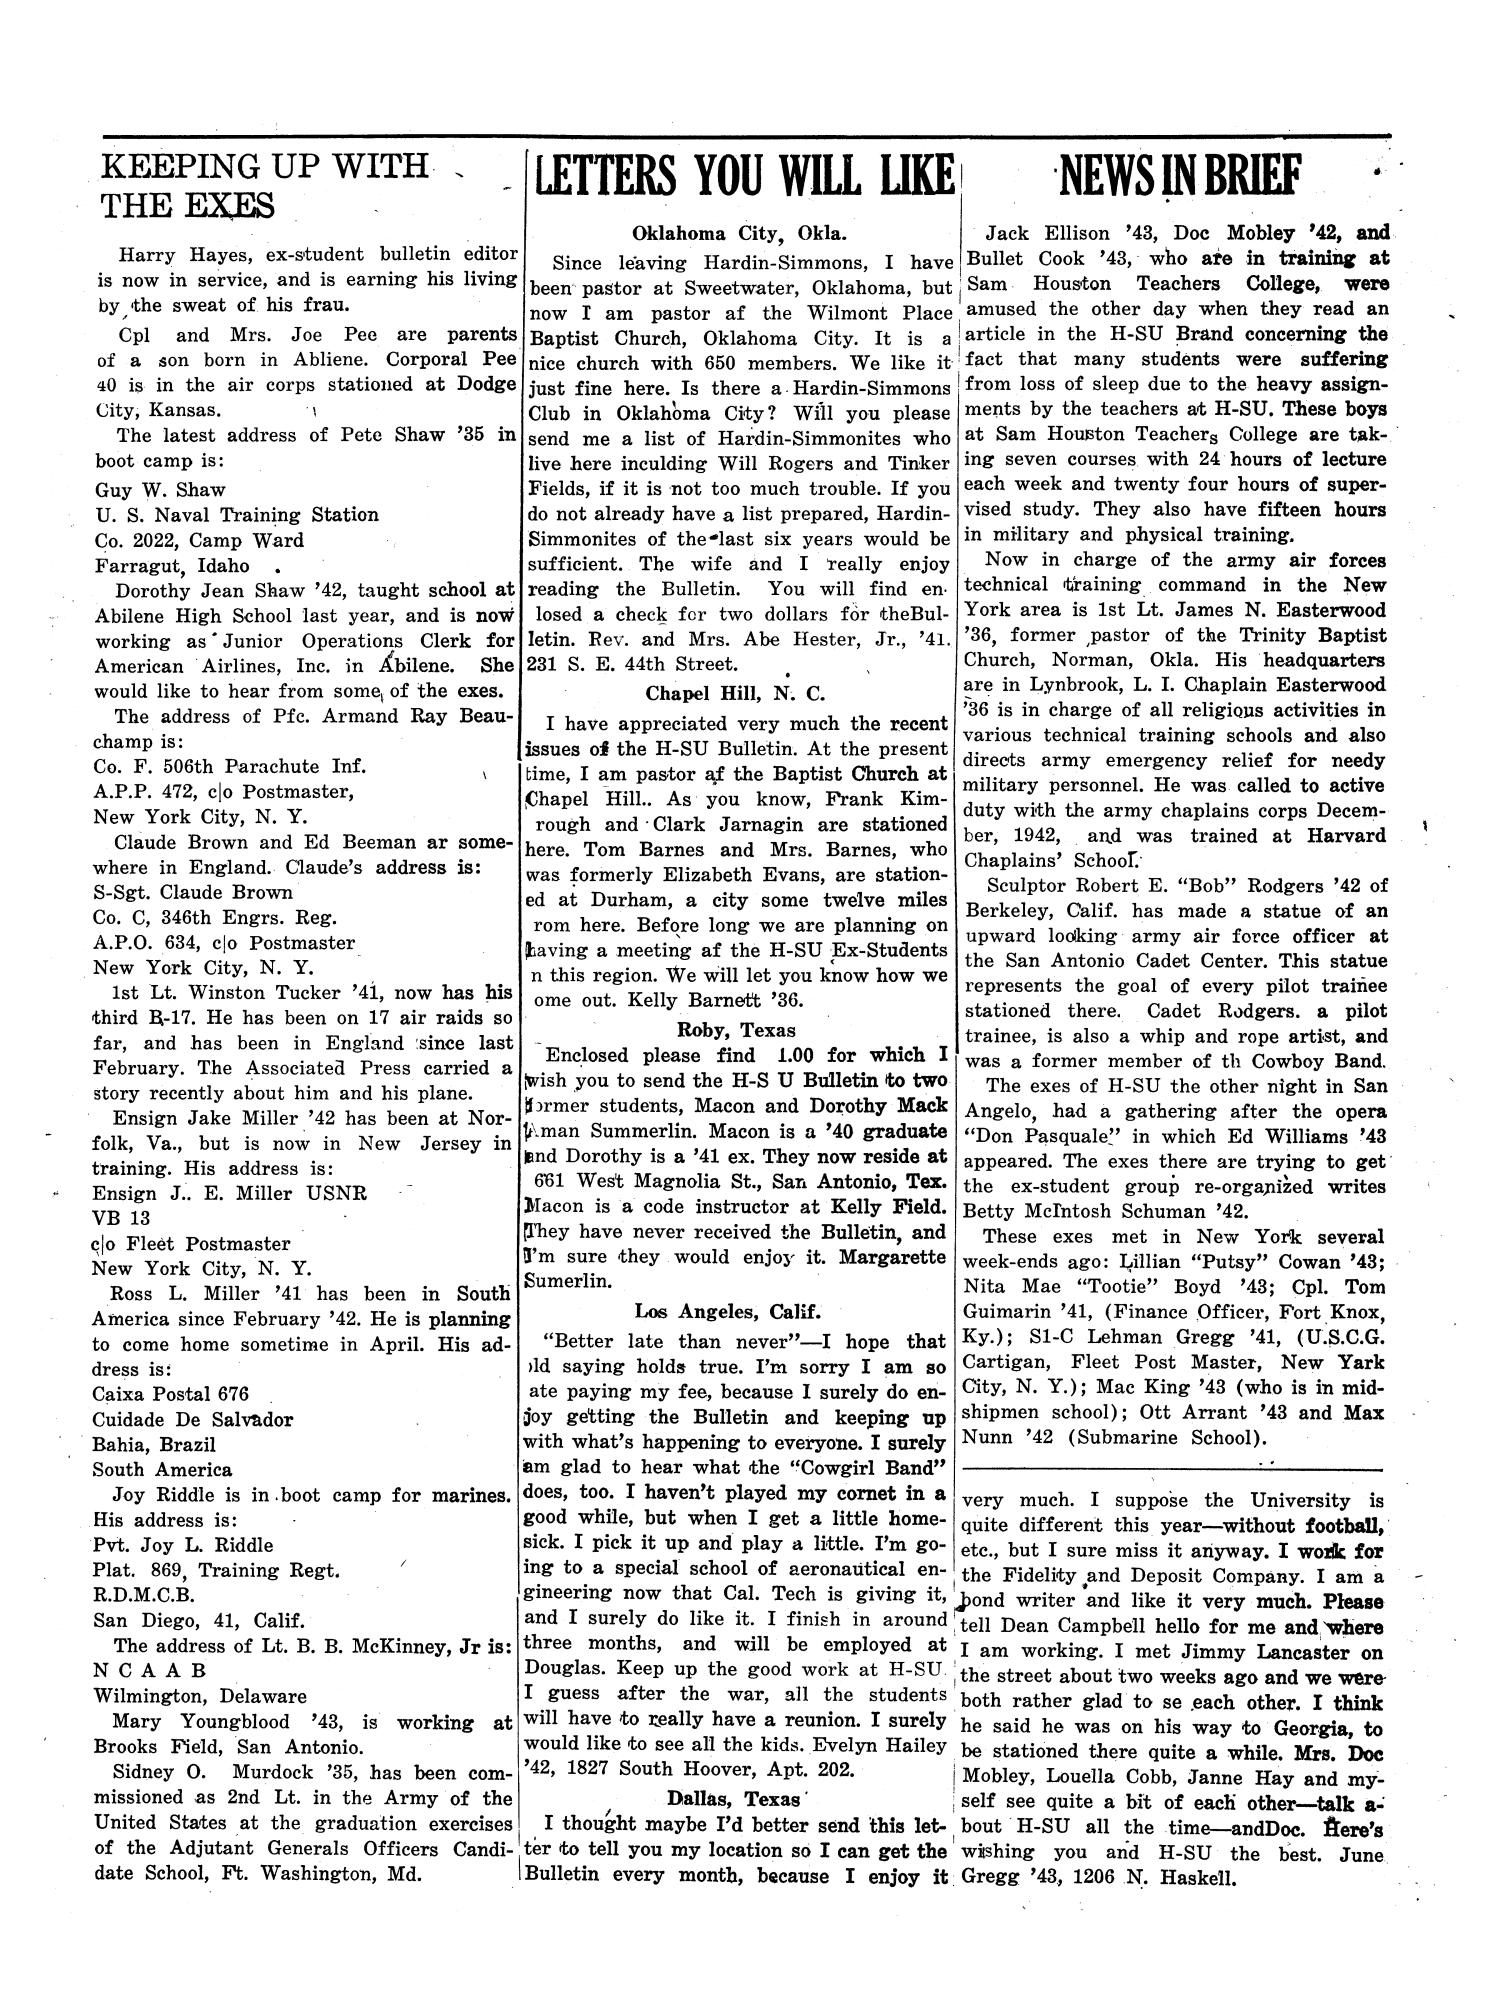 Bulletin: Hardin-Simmons University, Ex-Student Edition, November 1943
                                                
                                                    5
                                                